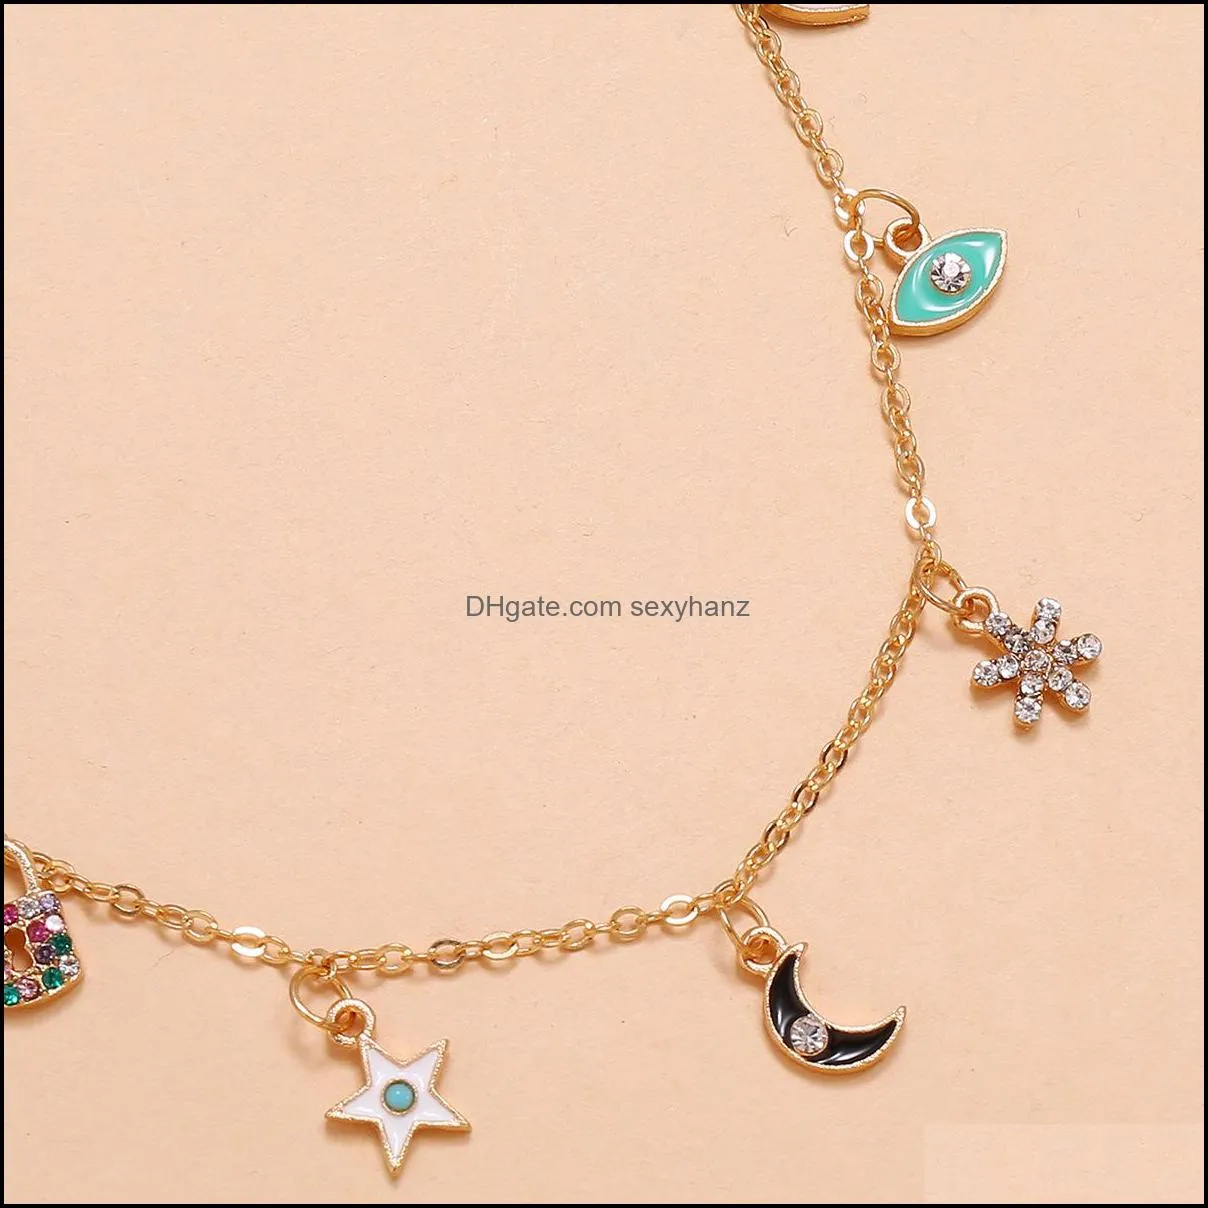 S1599 Hot Fashion Jewelry Lip Eye Devil Eye Key Lock Moon Snowflake Love Star Geometric Collarbone Chain Charms Pendant Necklace